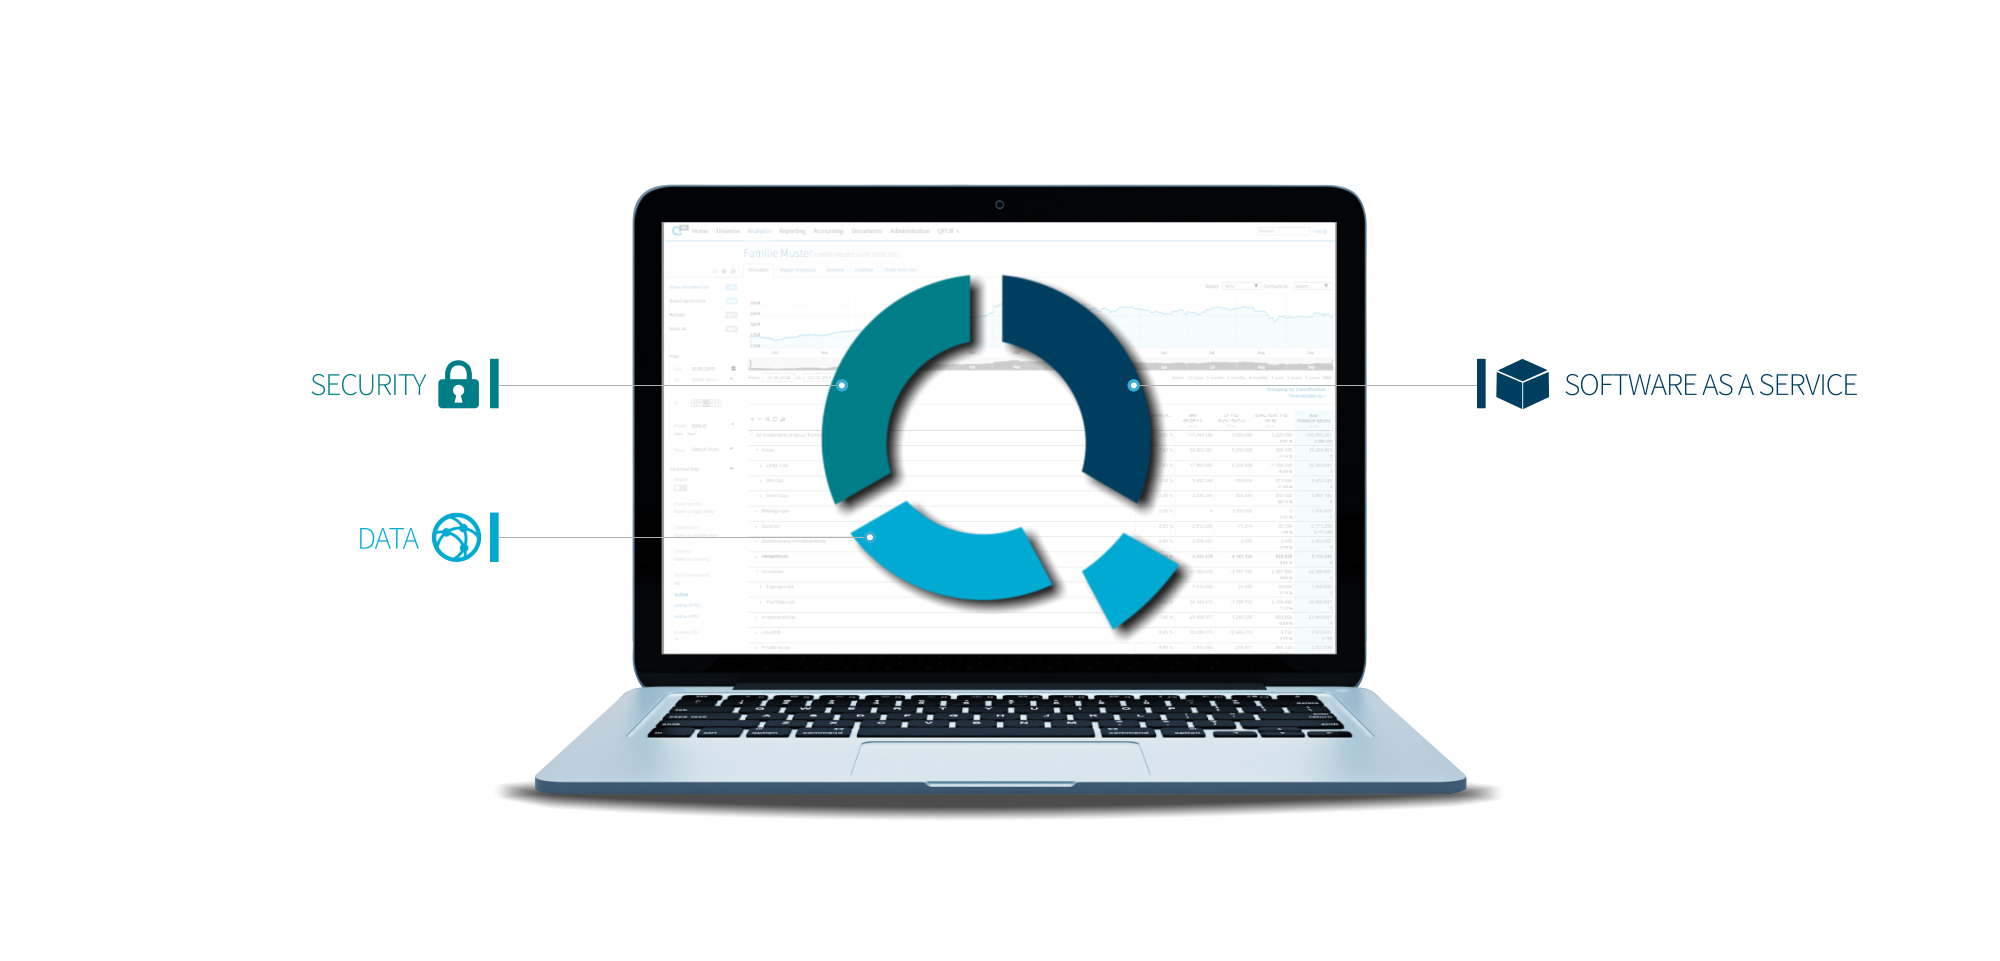 Platform QPLIX software notebook and Logo 3 blue shades: security, data and Software as a Service